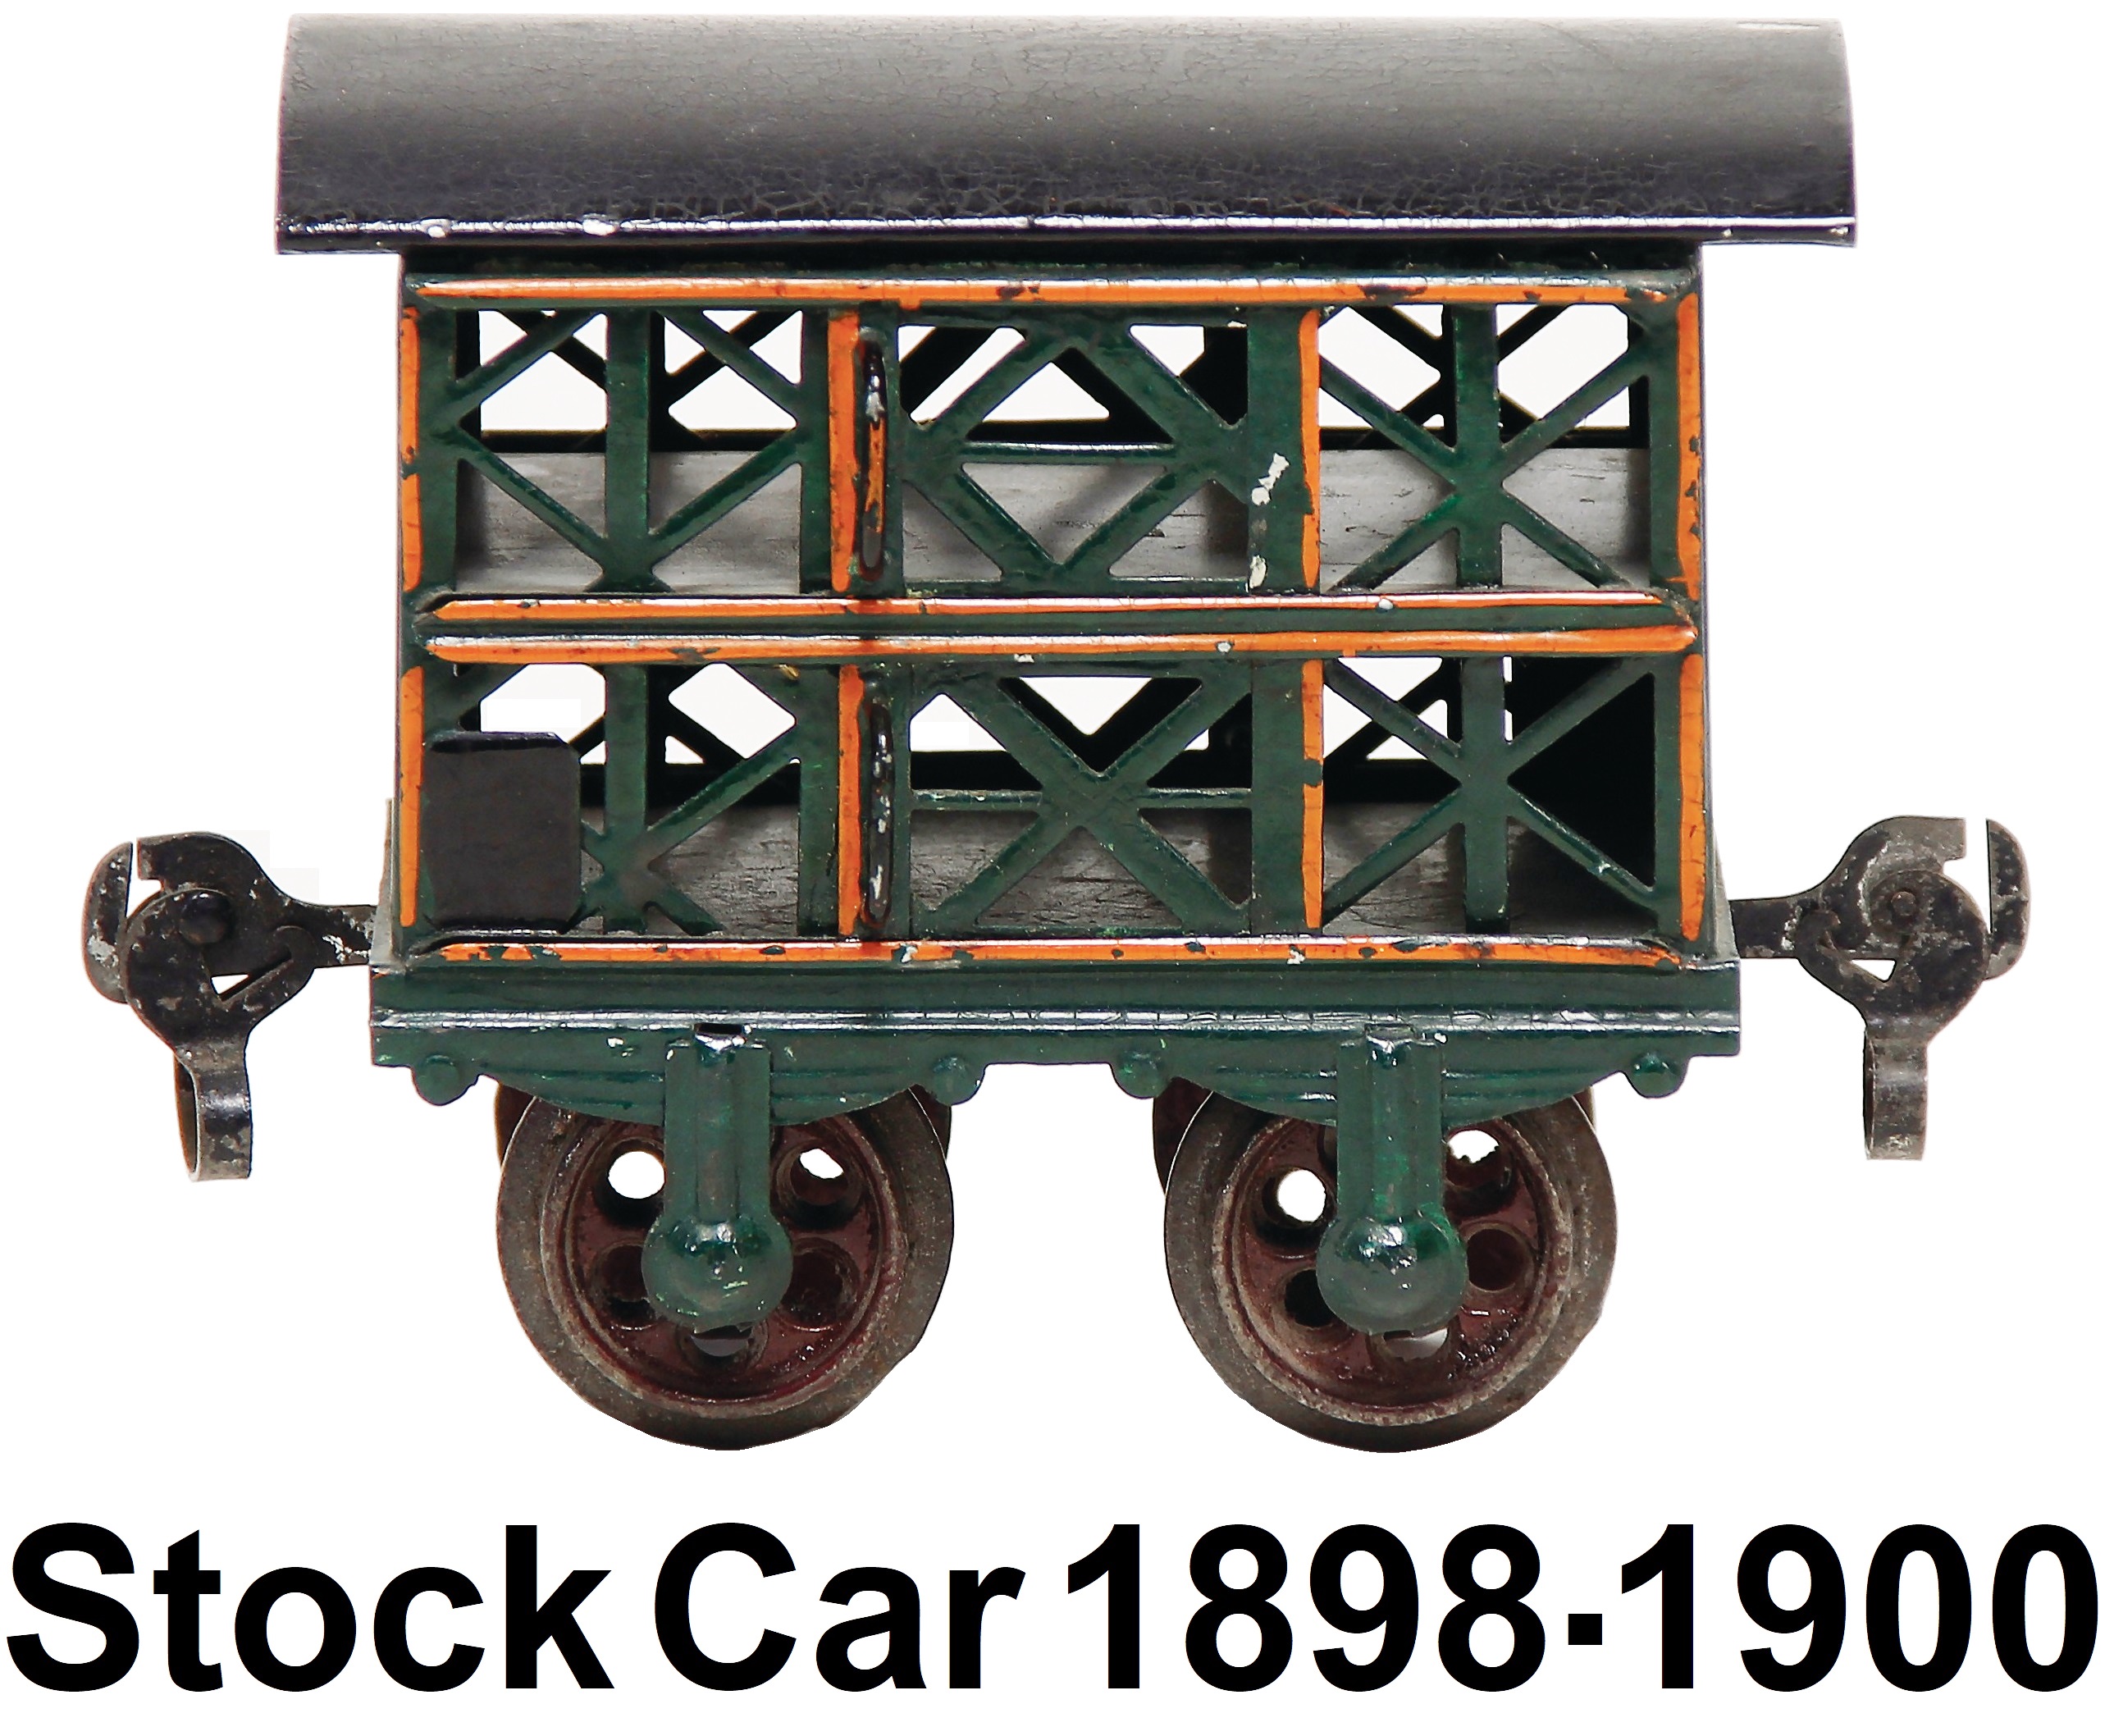 Märklin #1 gauge #1809, small animal car, circa 1898 - 1900